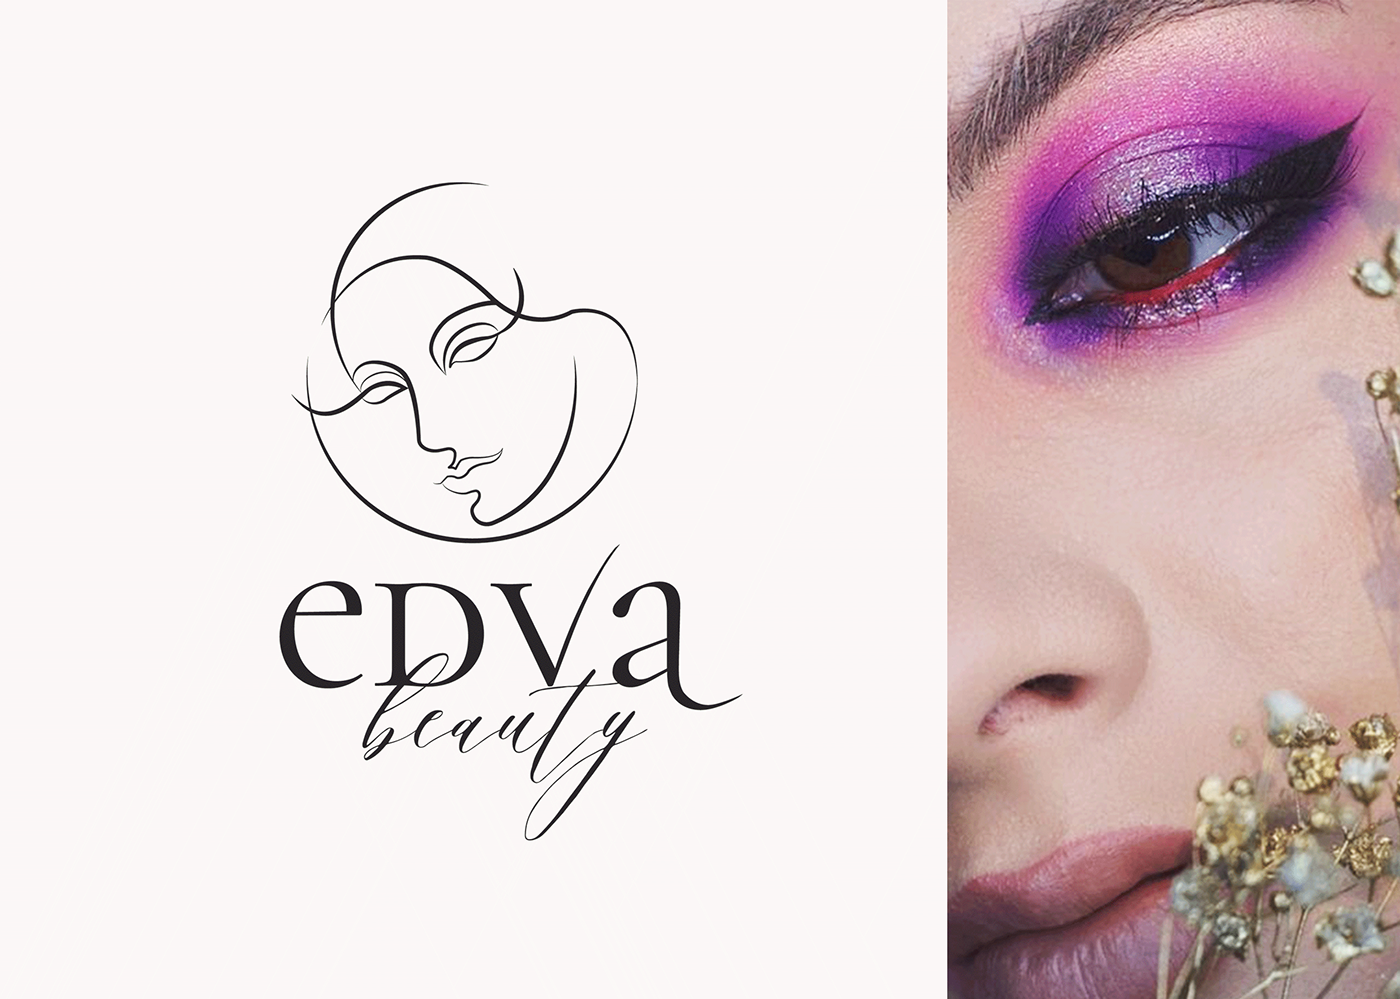 Branding Identity joc jocstudio lashes Logo Design logos Logotype makeup visual identity Beauty Products